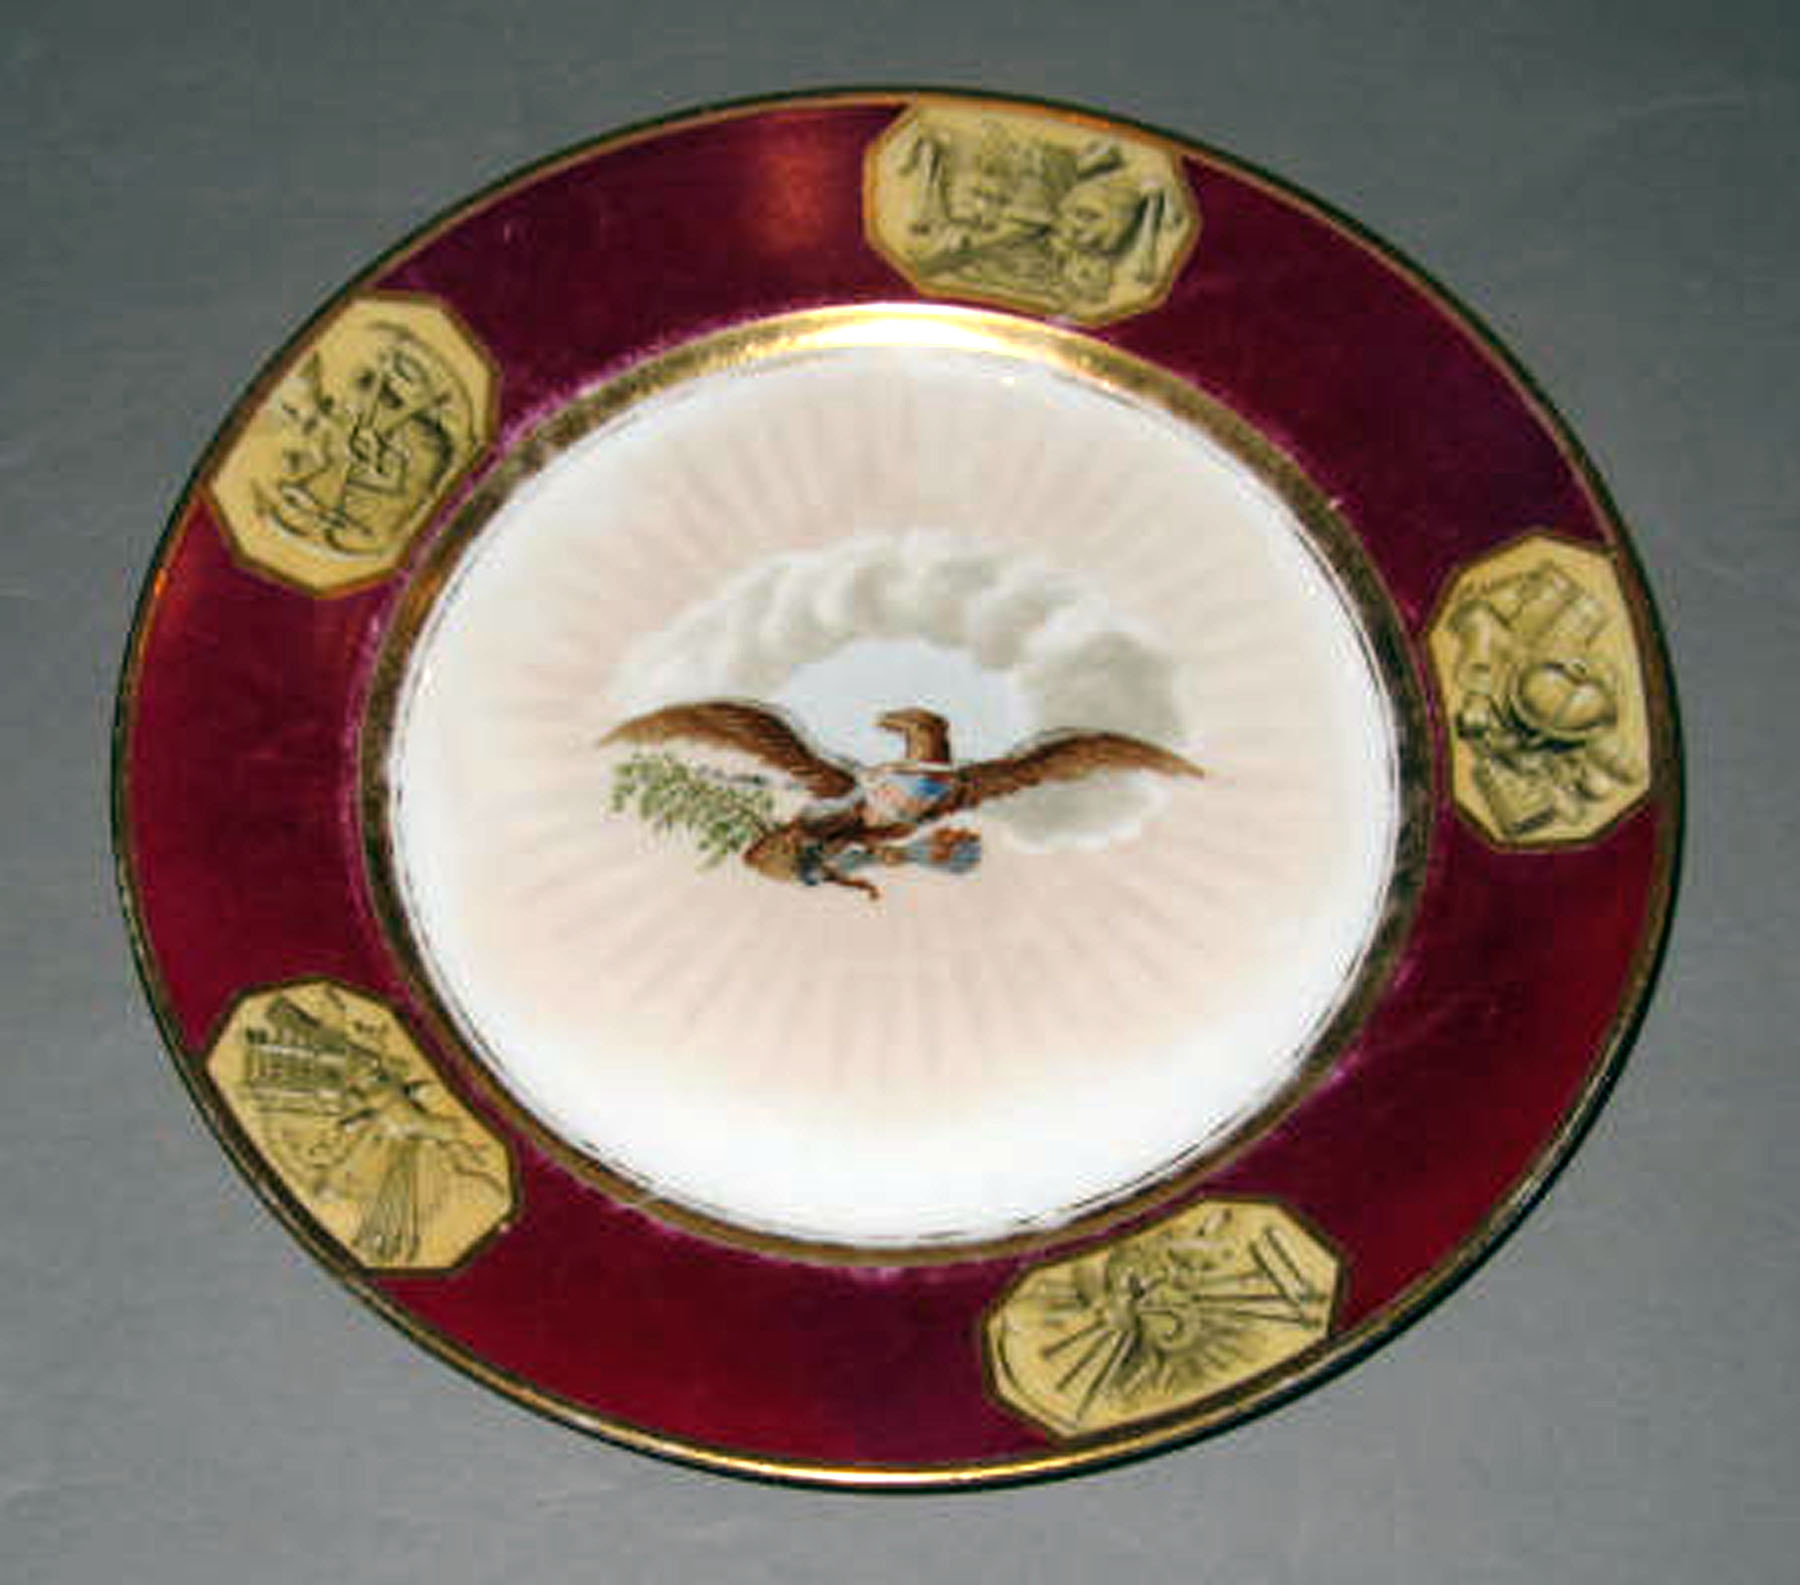 1958.1606.022 Porcelain dessert plate